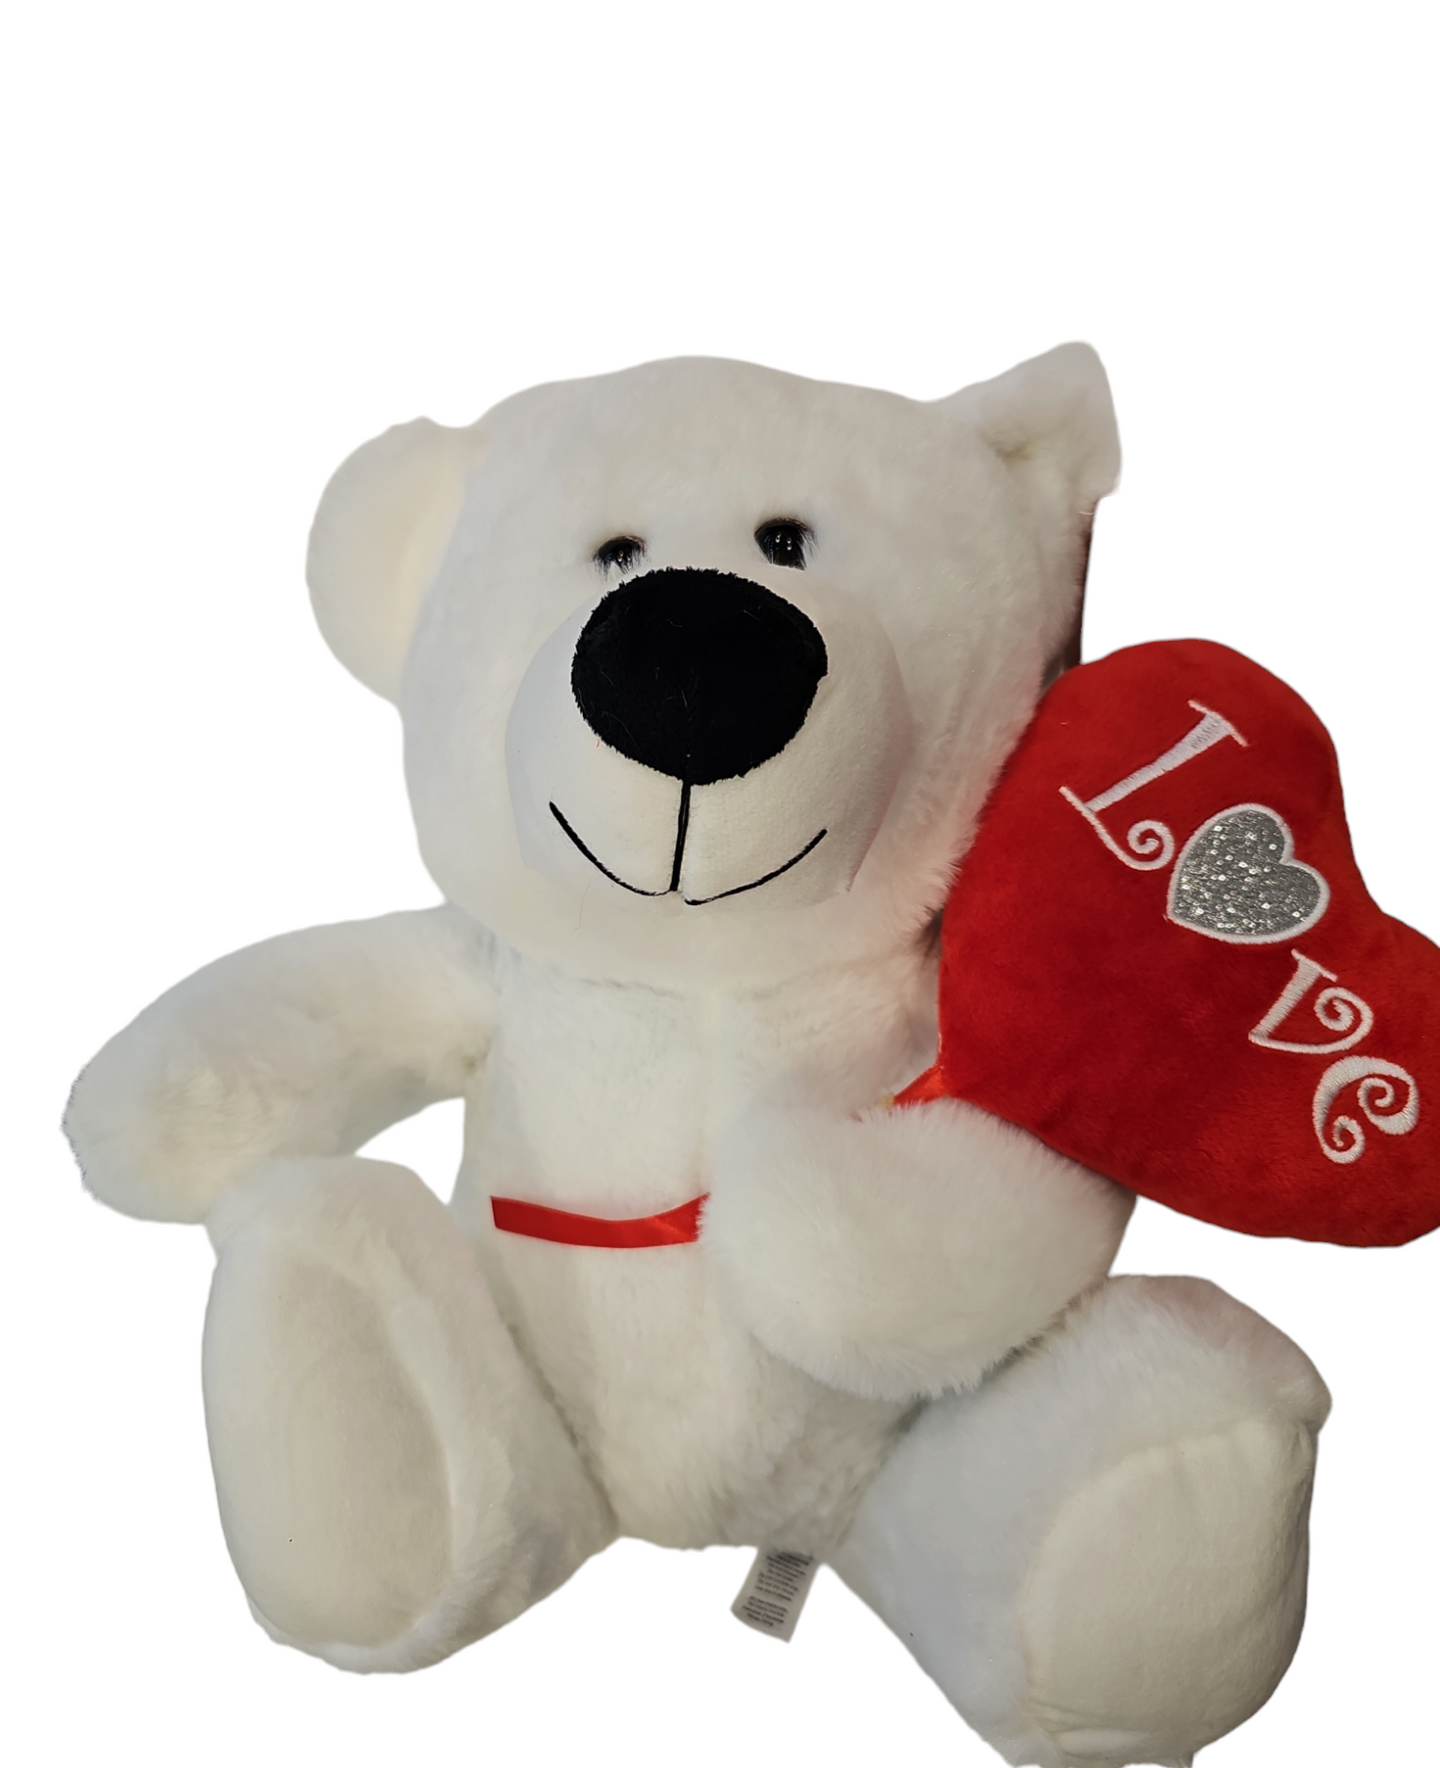 White Teddy Bear with Love Heart Balloon (35cm)